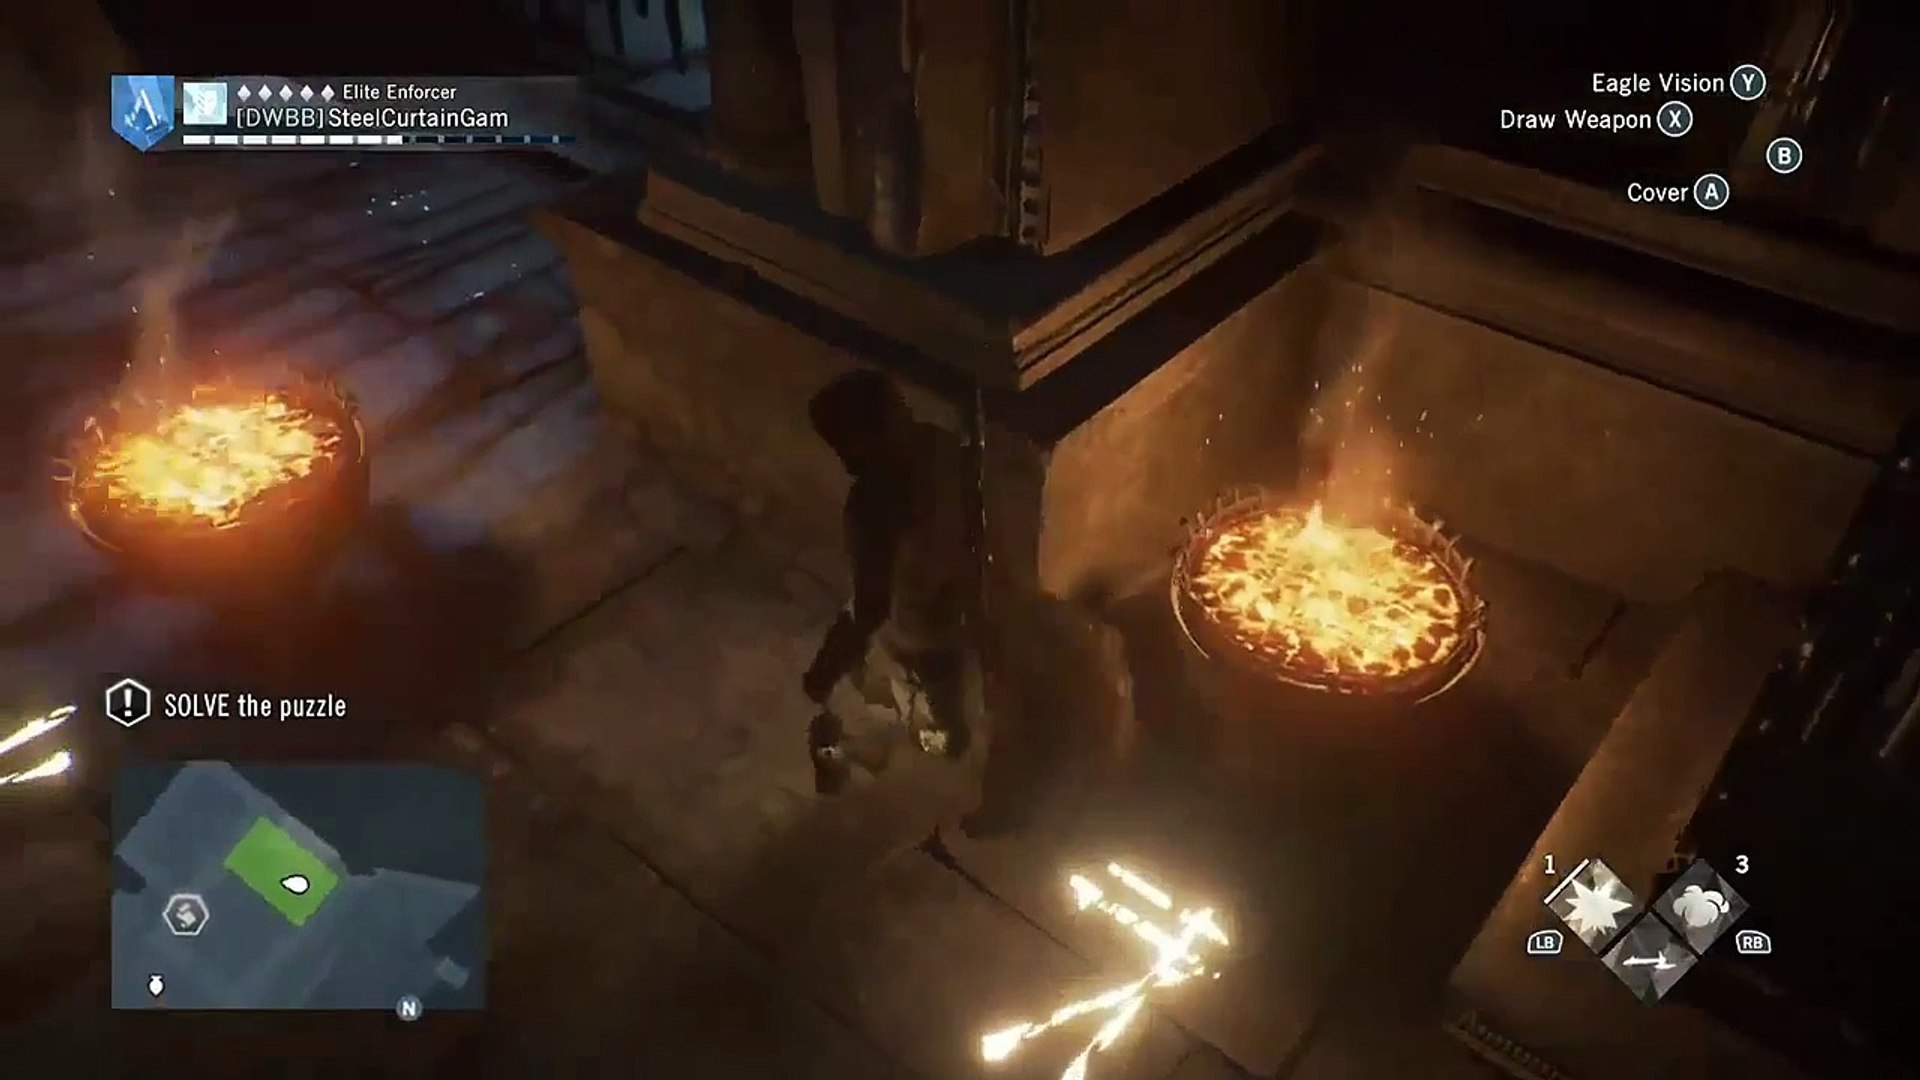 Assassin's Creed Unity Dead Kings Walkthrough Part 1 Gameplay DLC